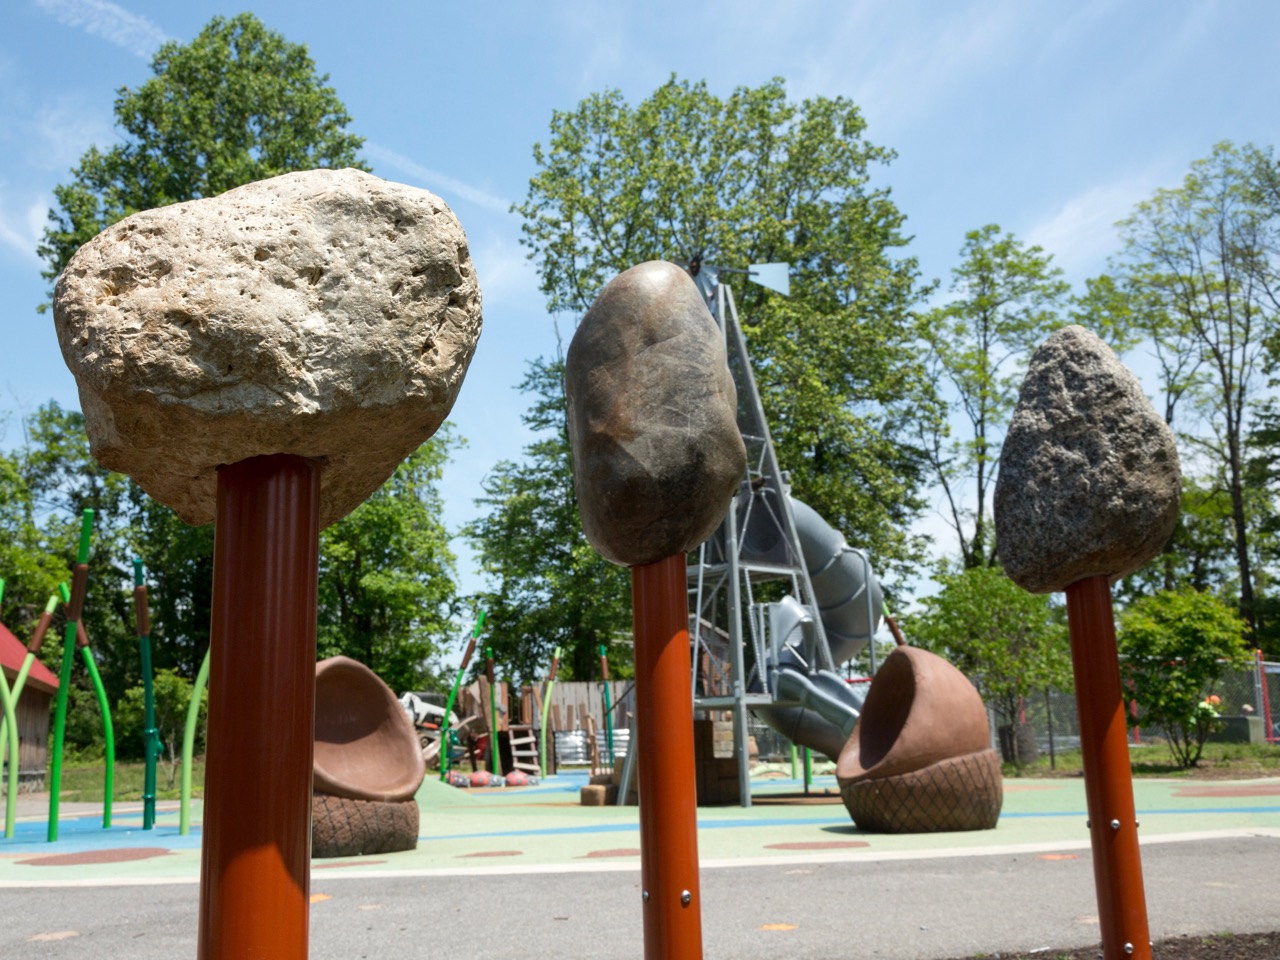 Playground spinning rock